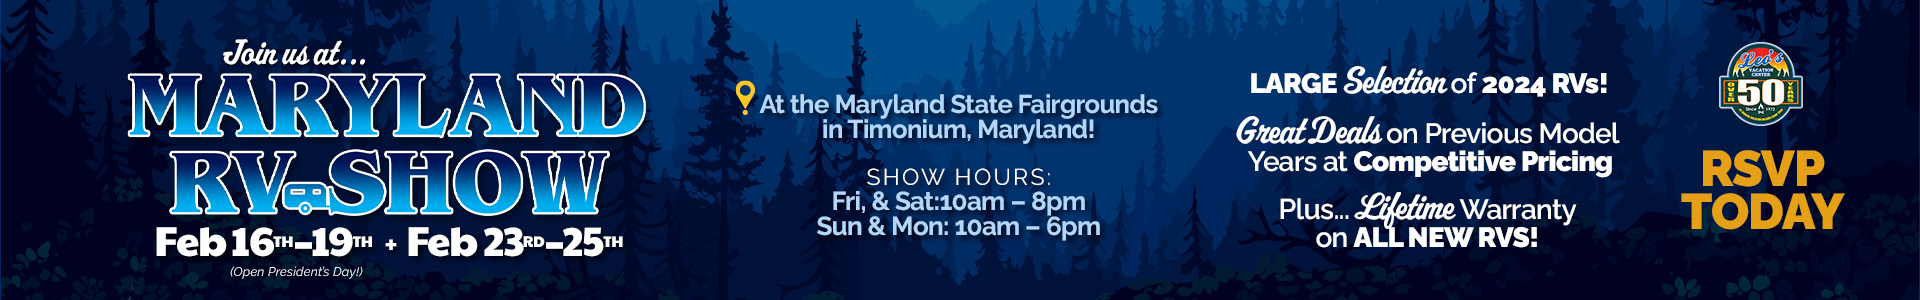 Maryland RV Show - desktop banner